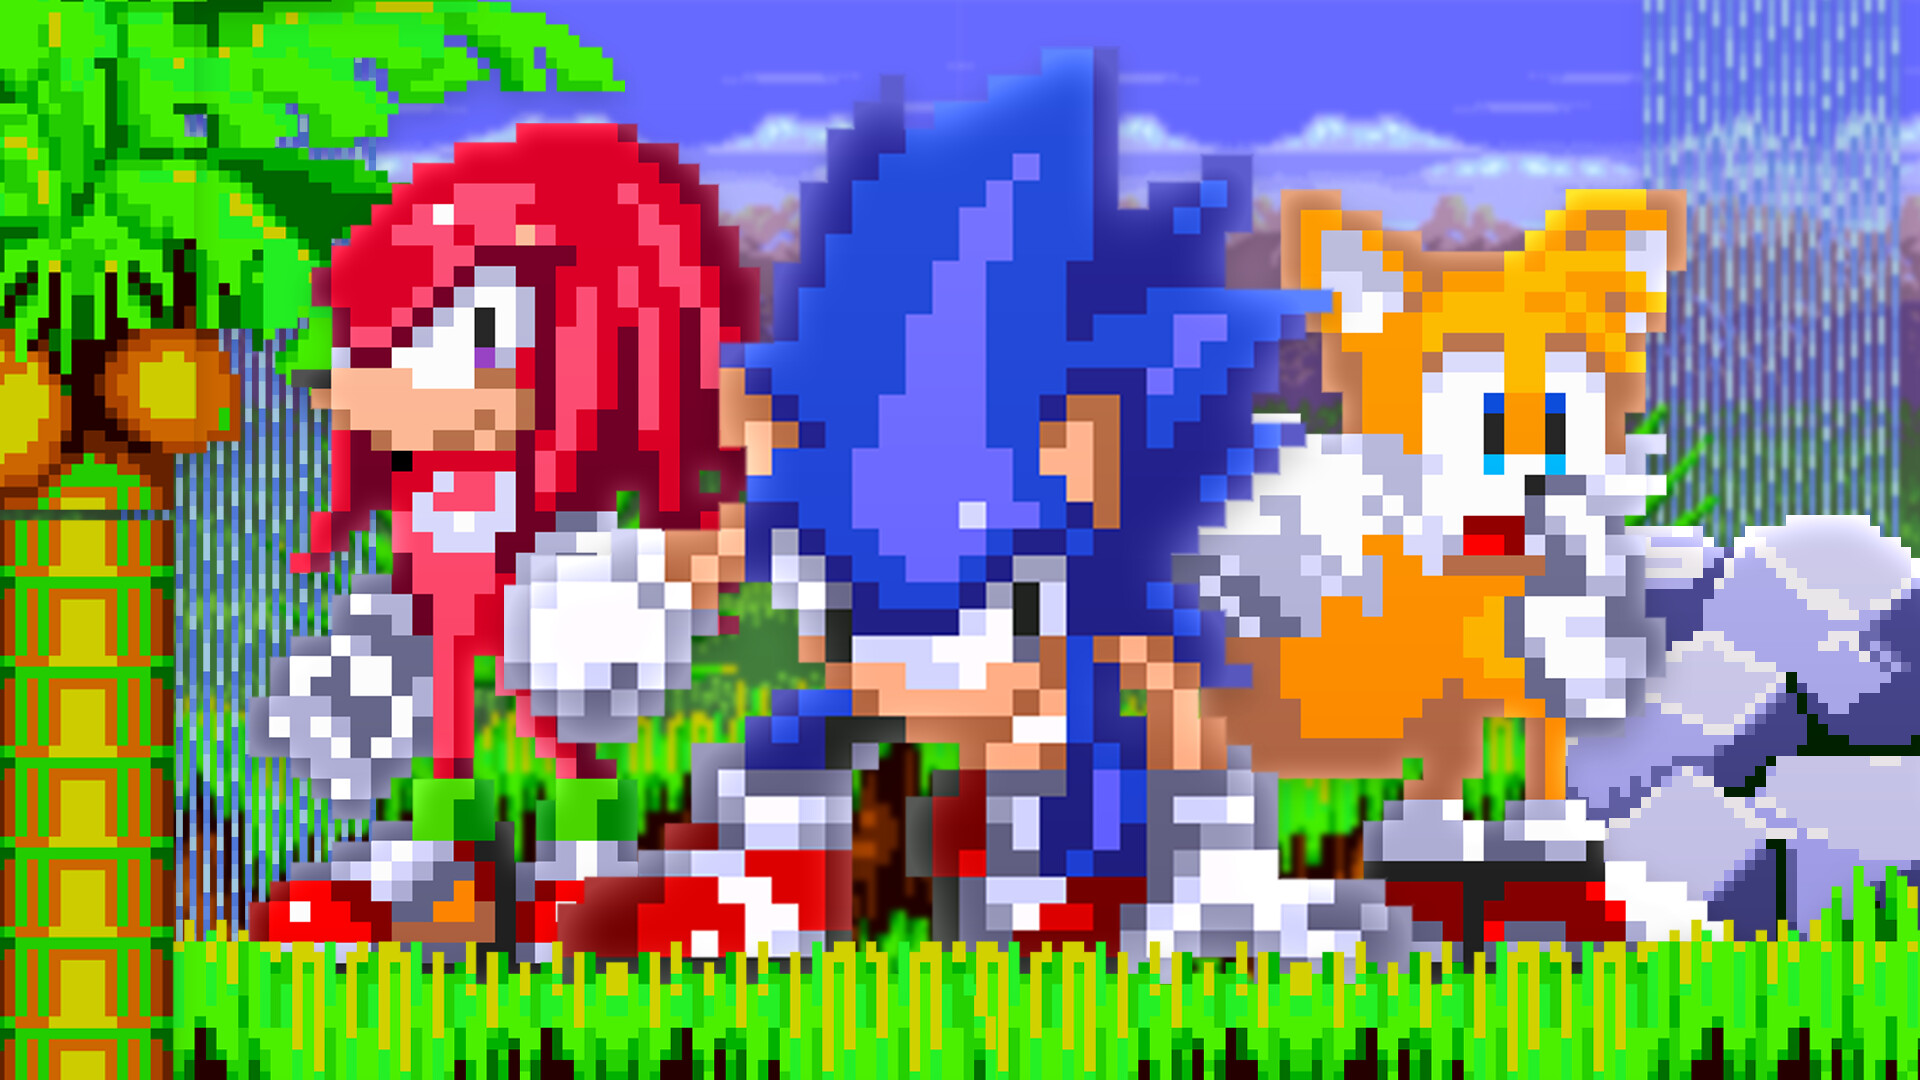 Sonic 3 A.I.R - Modgen Mighty Mod 